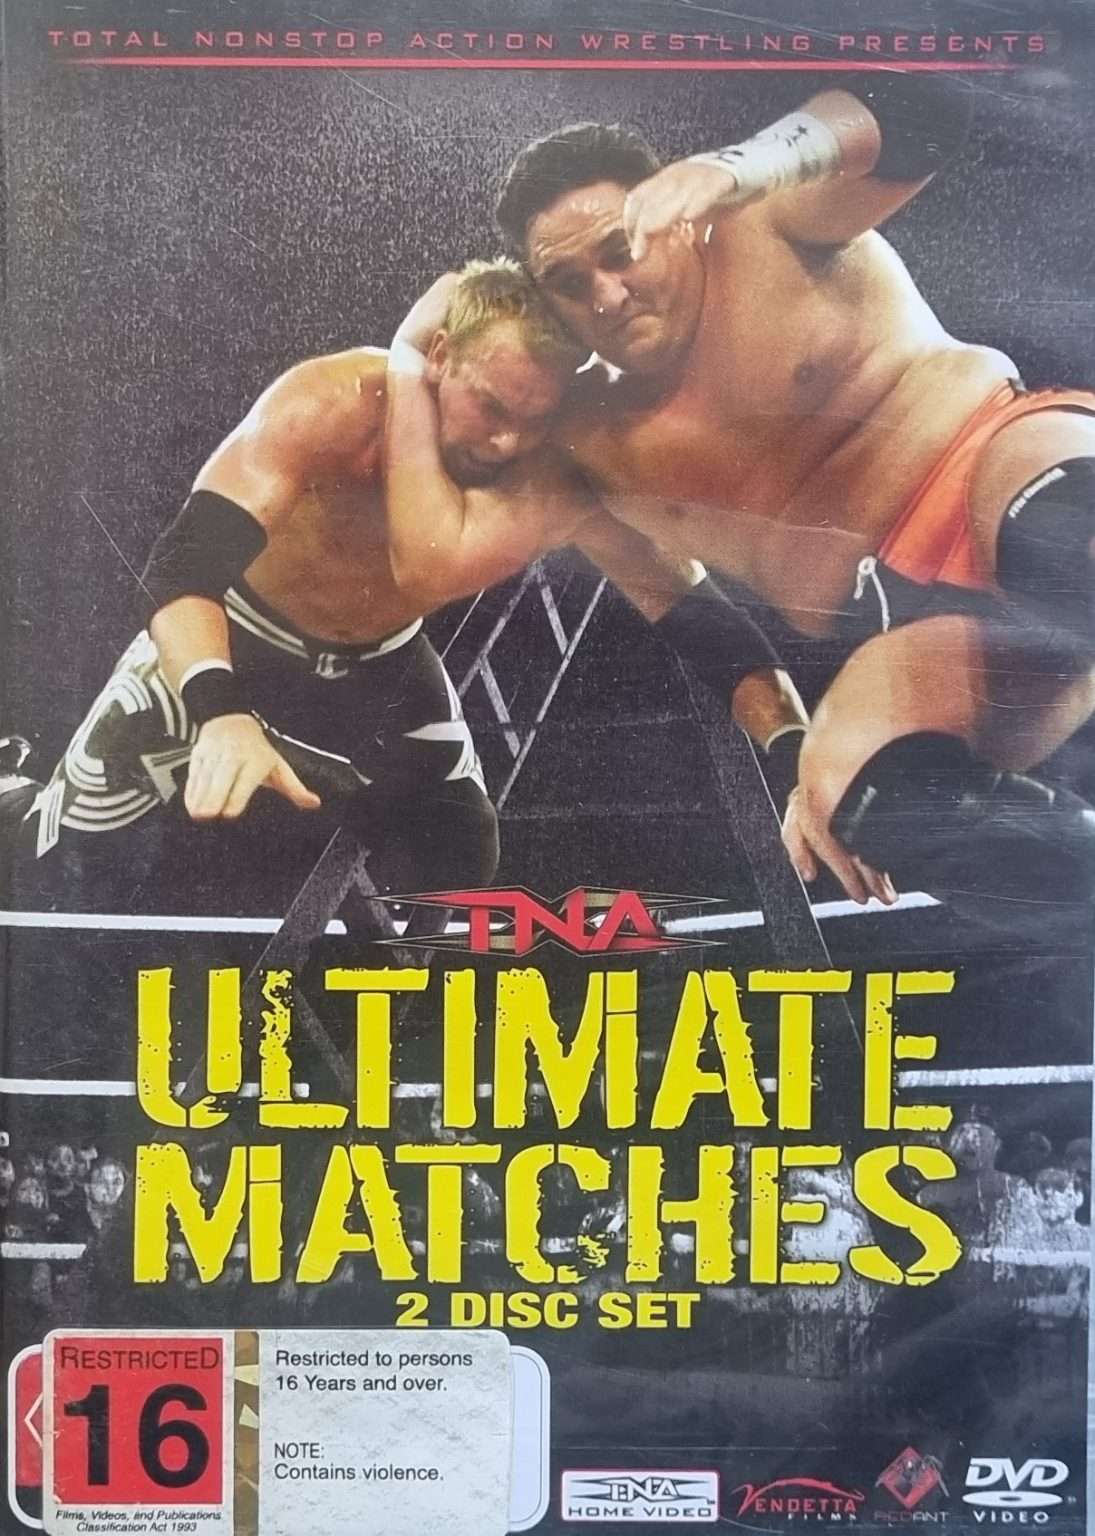 TNA Ultimate Matches 2 DVD Set